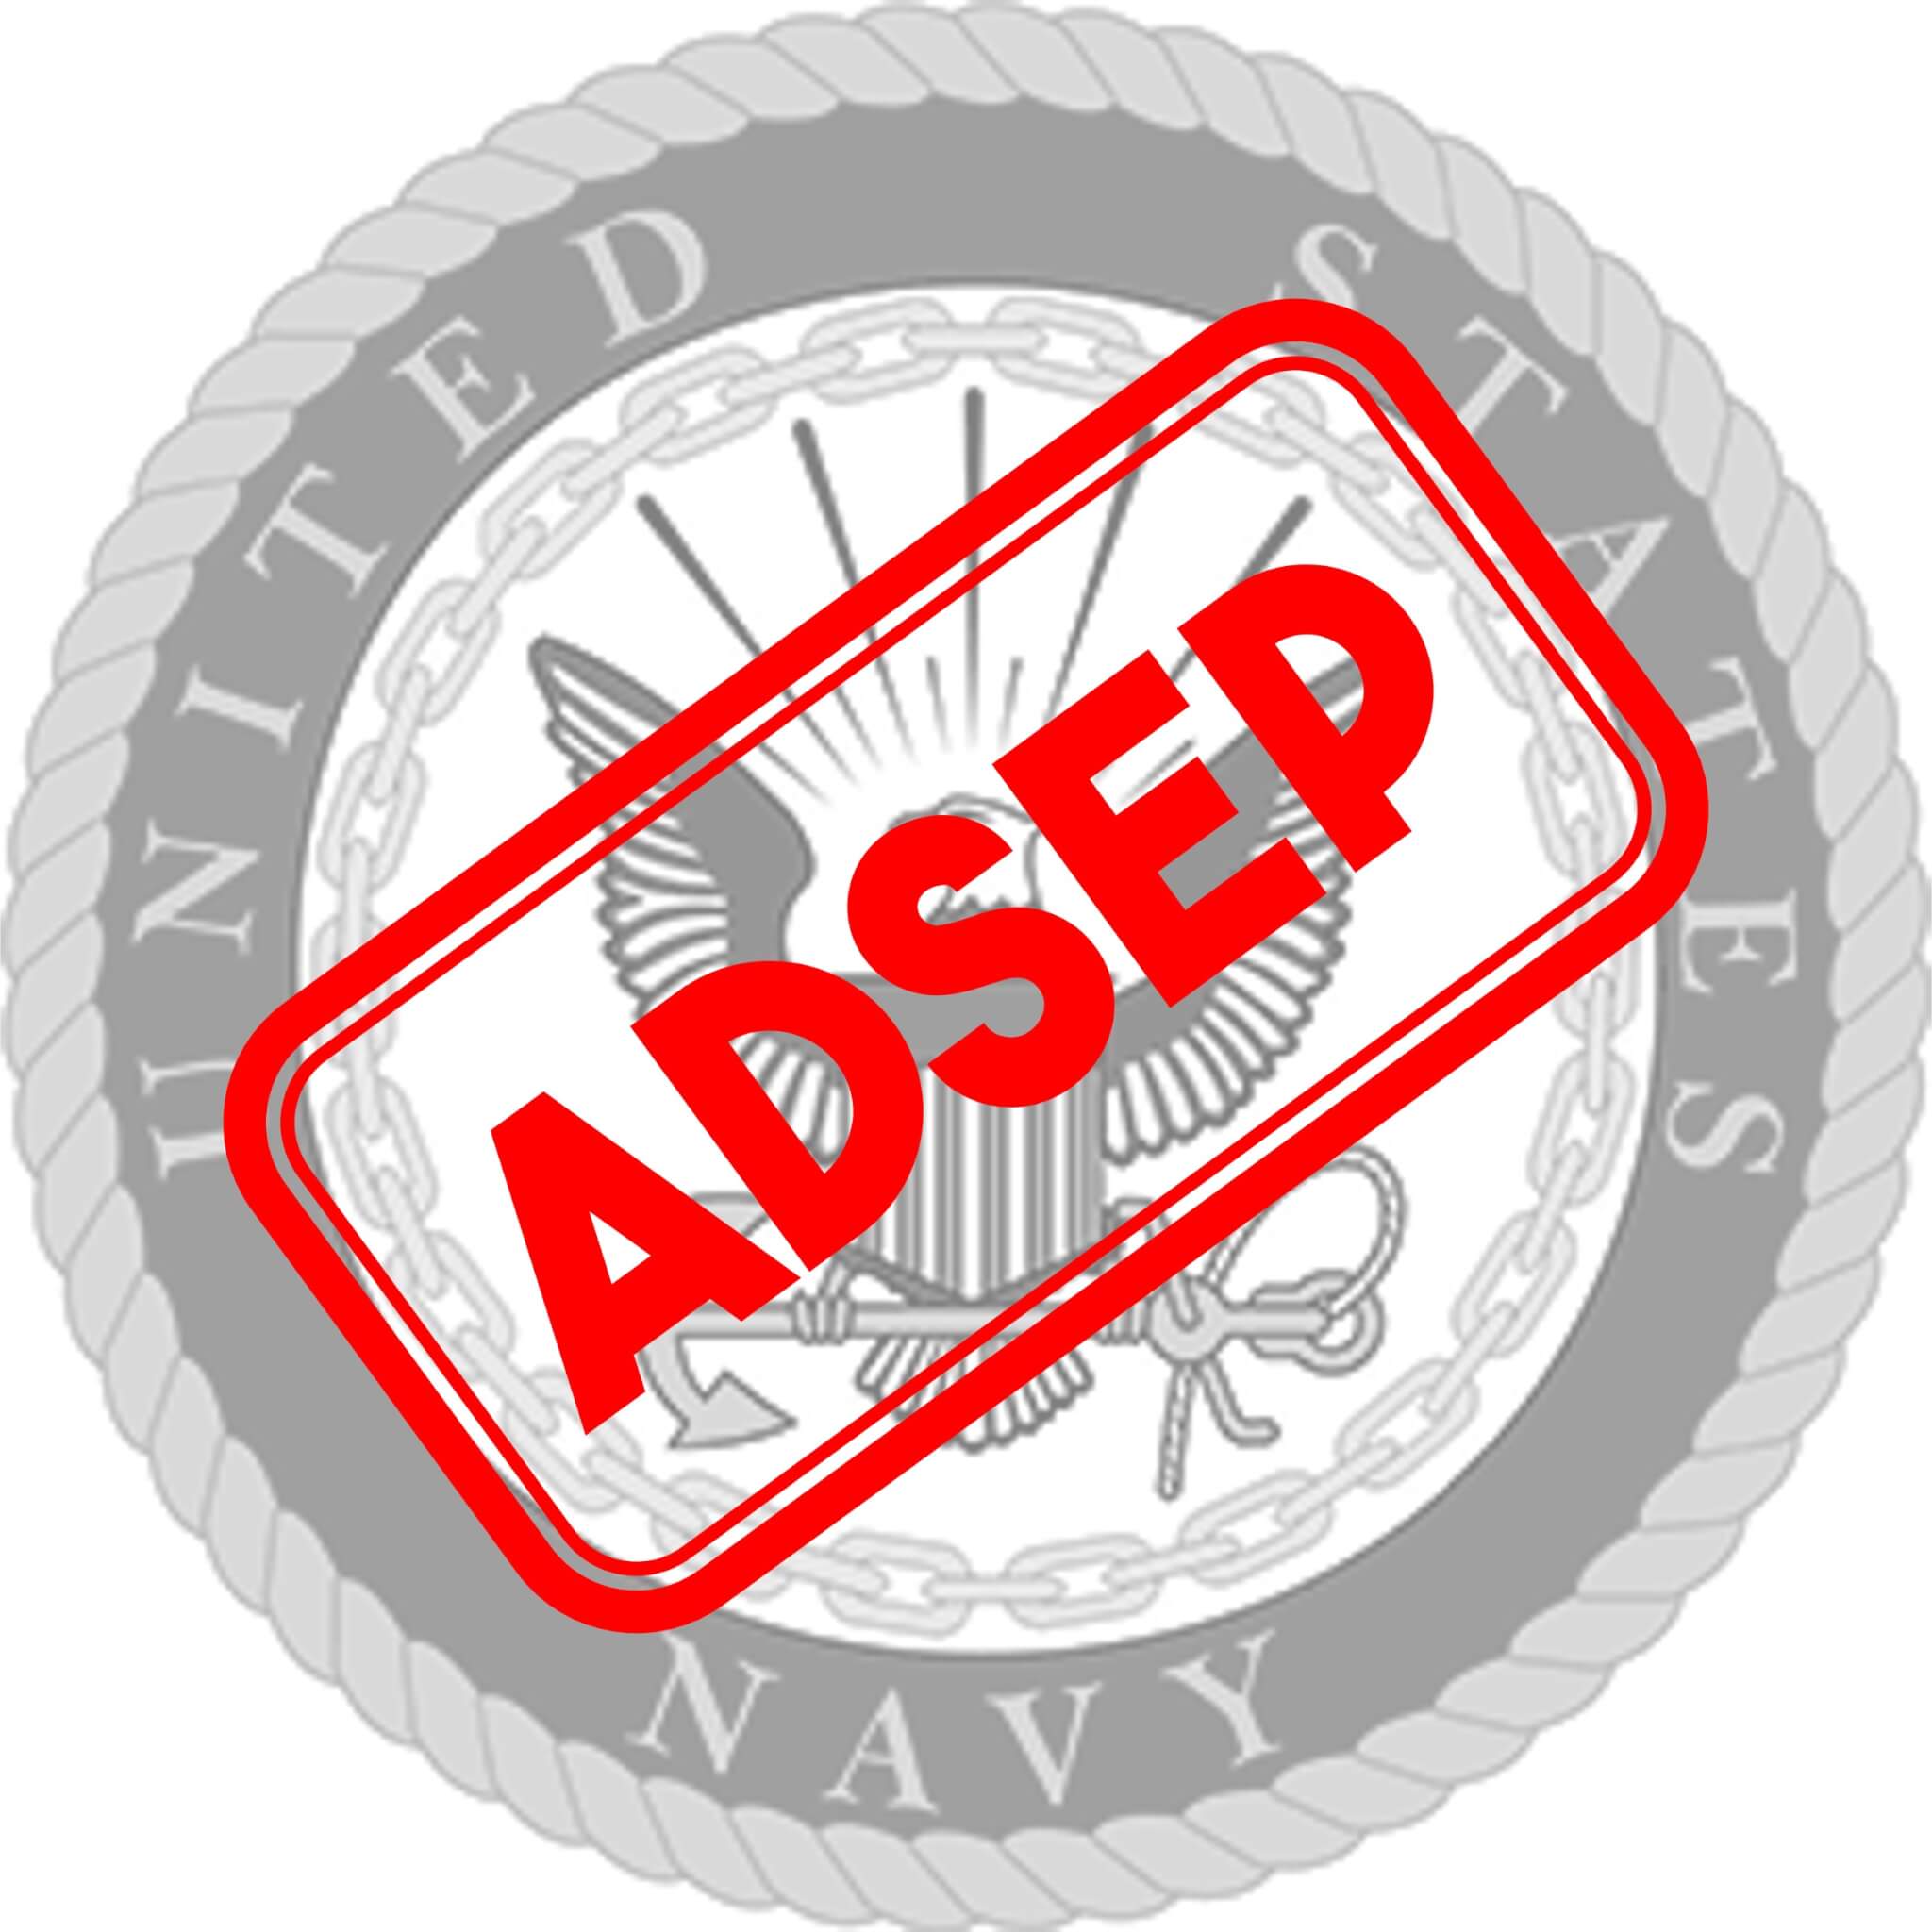 Navy ADSEP Response Template